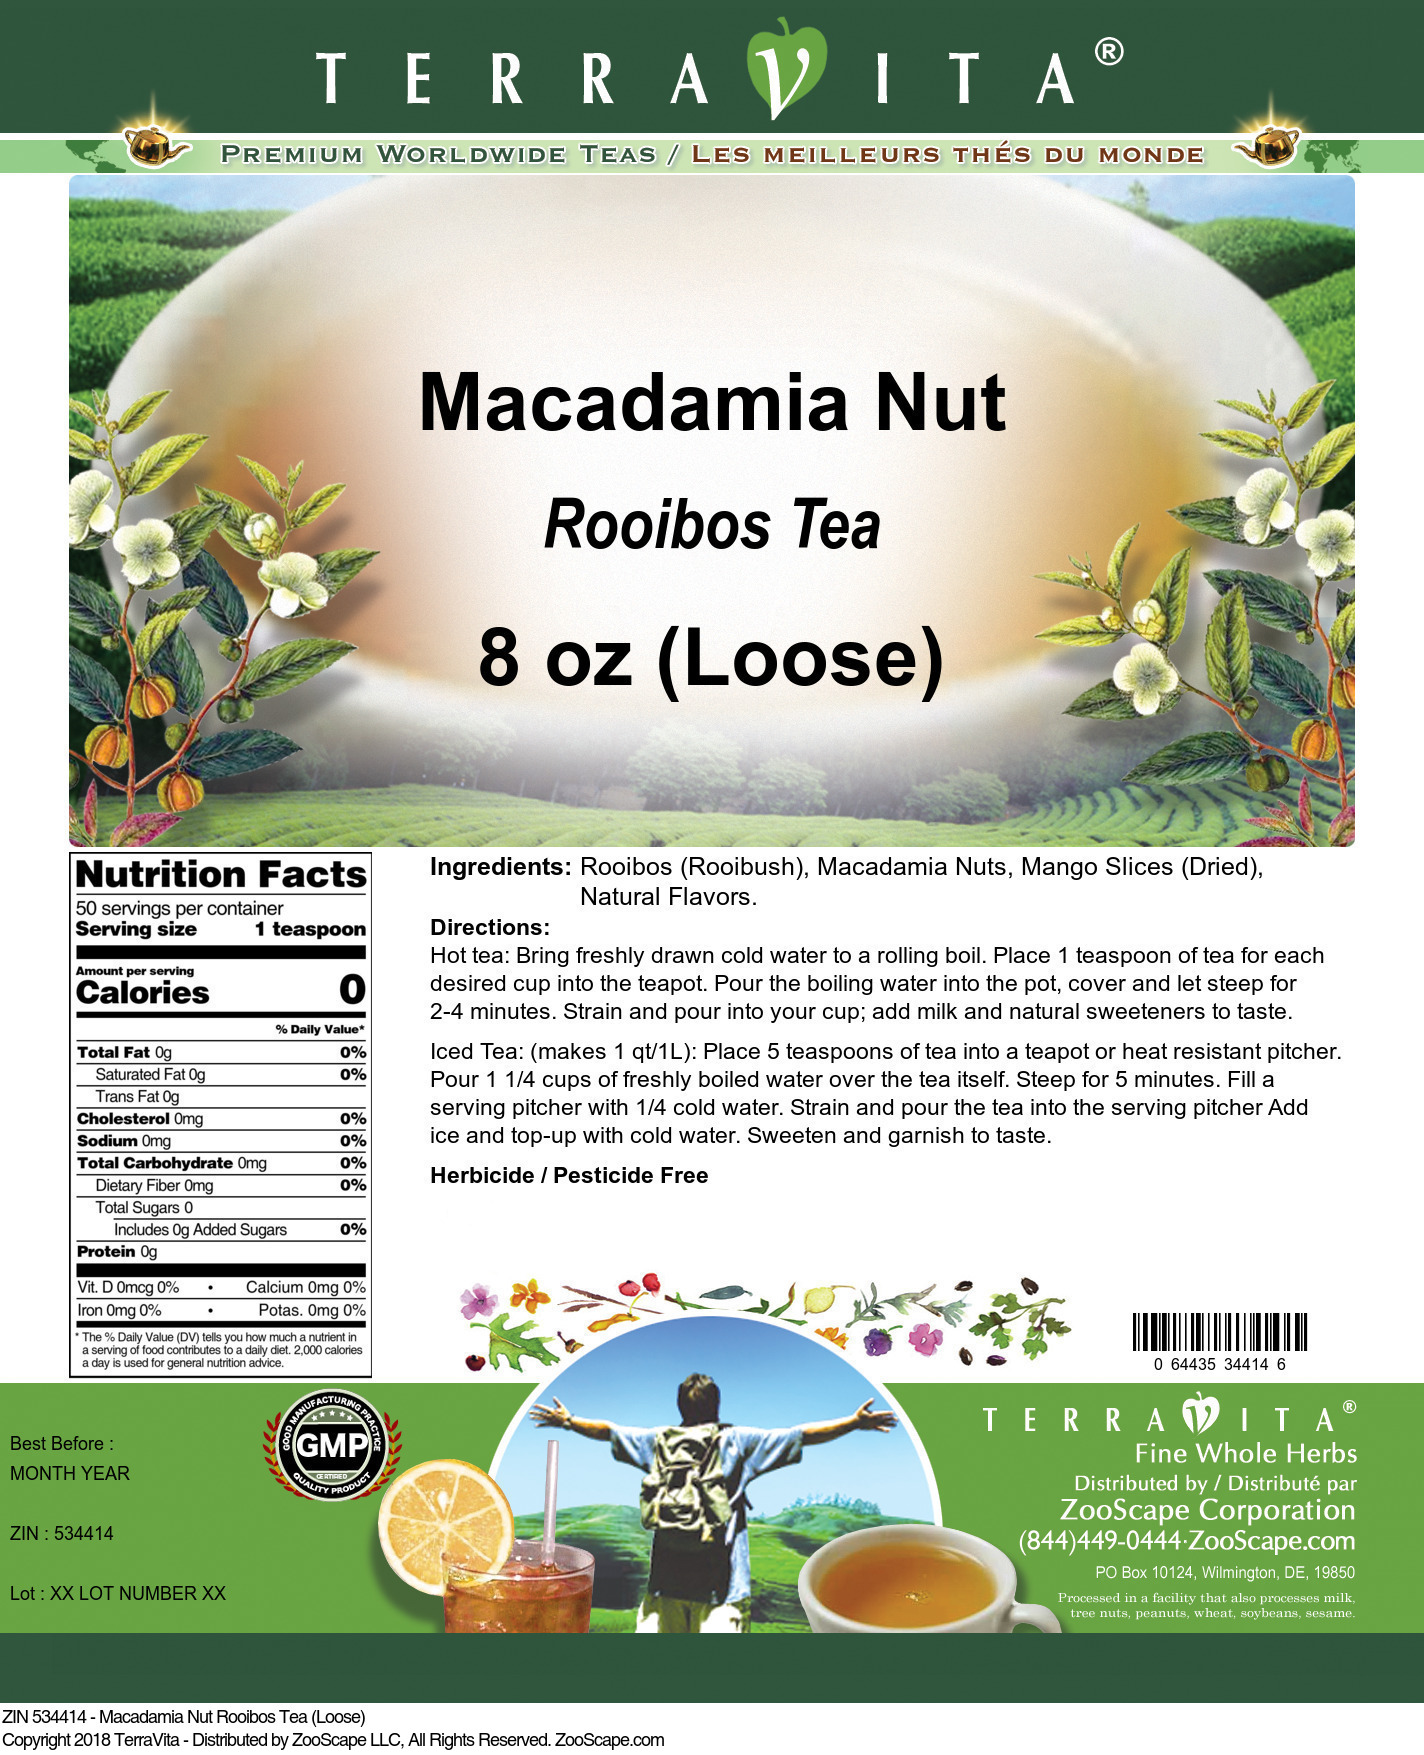 Macadamia Nut Rooibos Tea (Loose) - Label